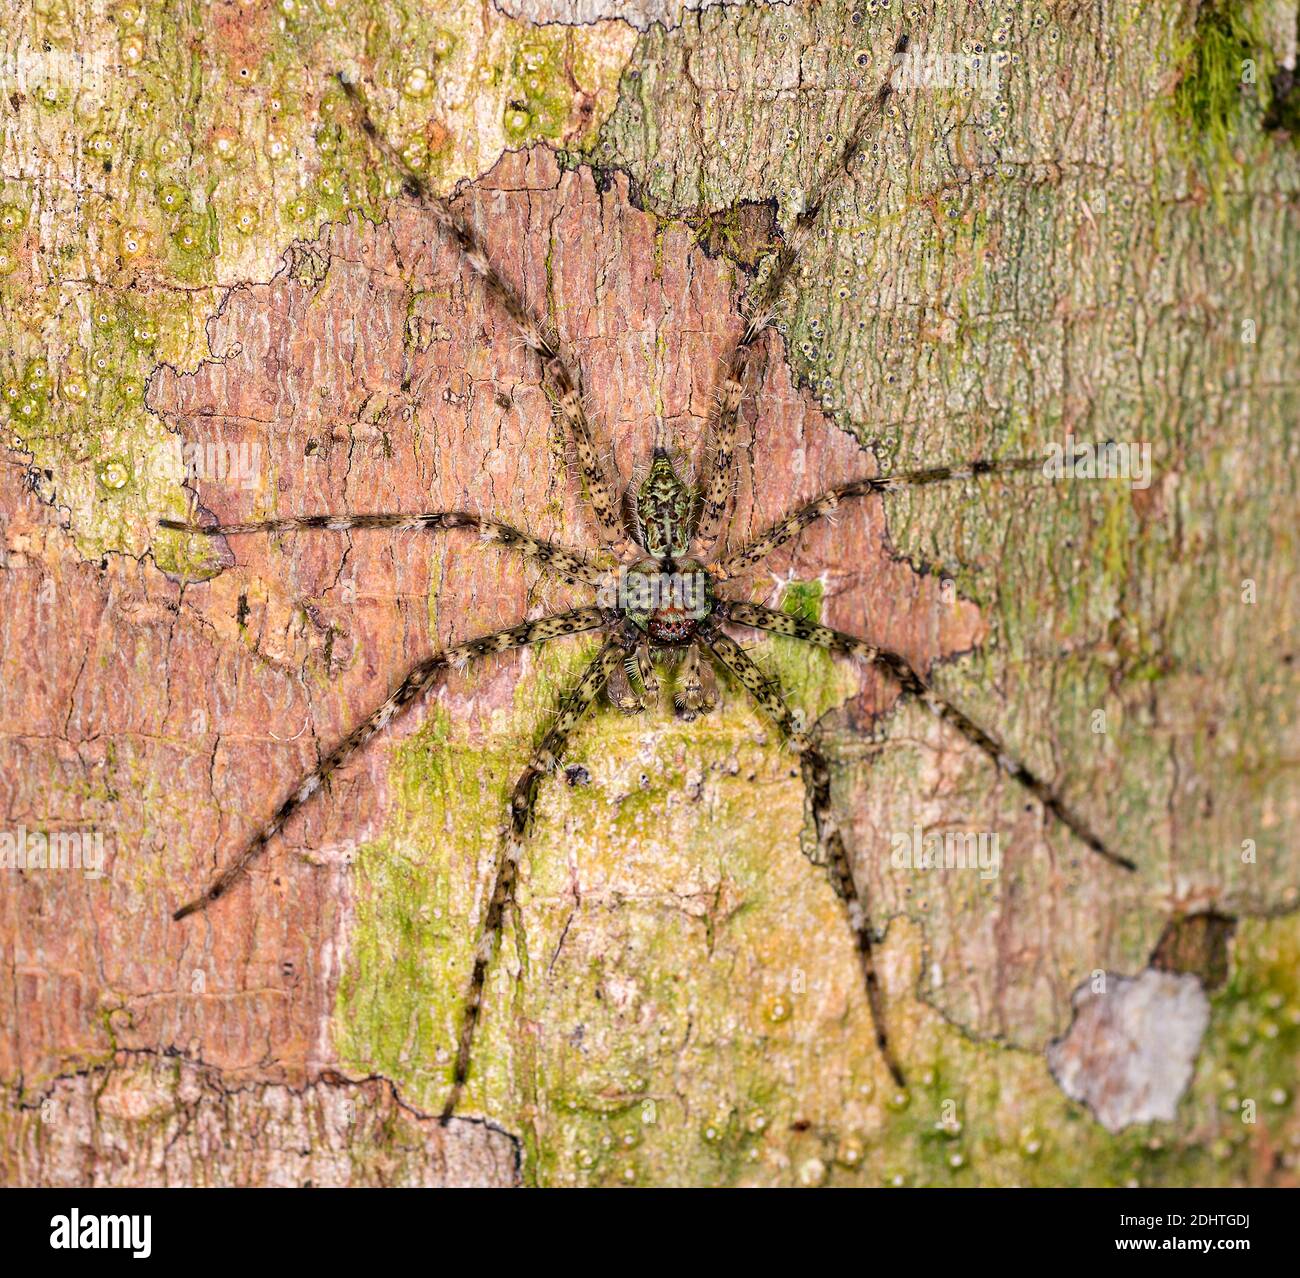 Huntsman spider (Heteropoda sp.?) from Kinabatangan River area, Sabah, Borneo Stock Photo